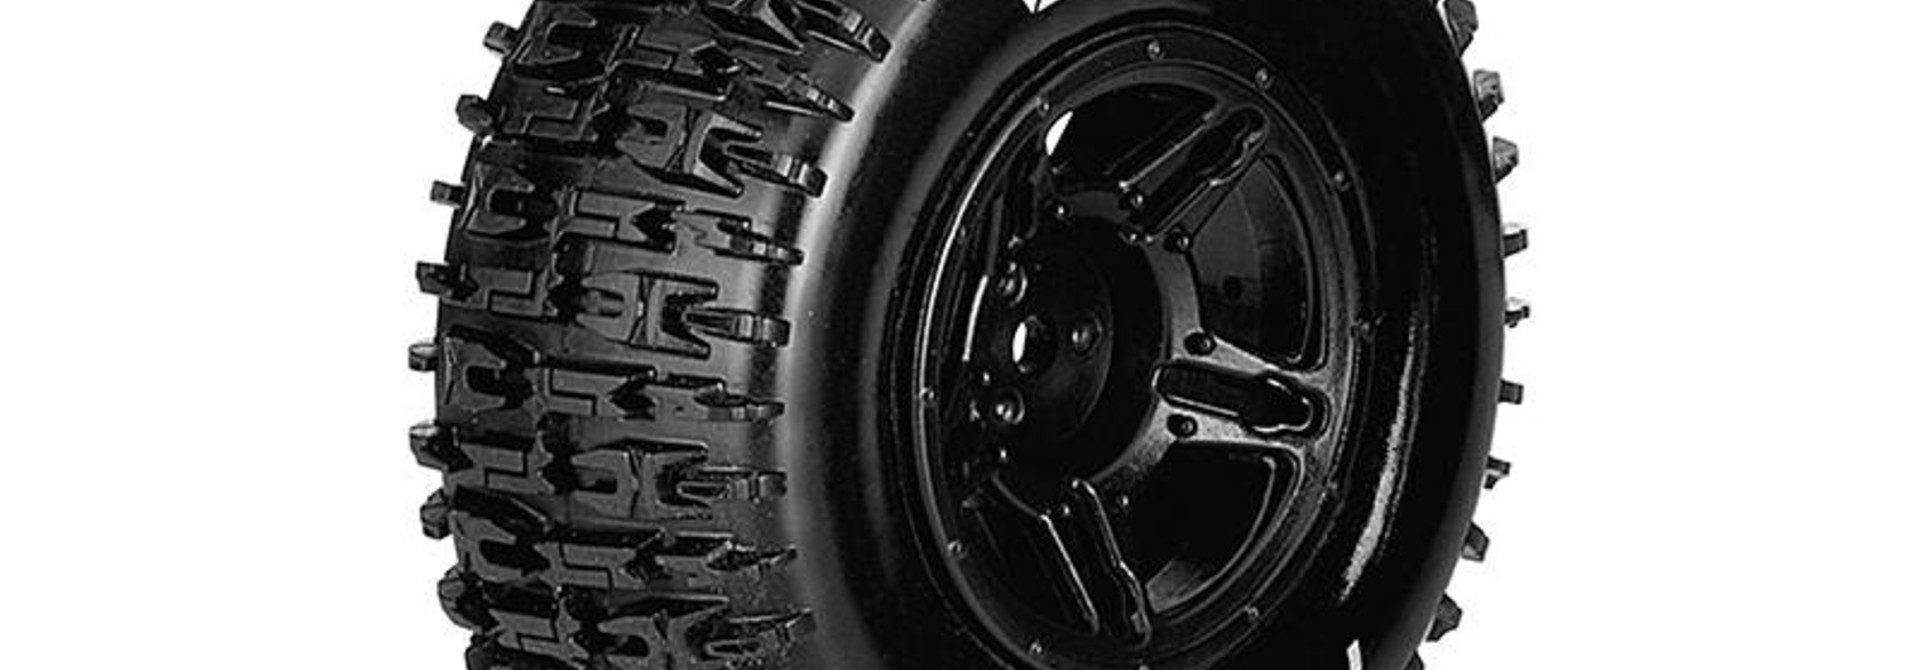 Louise RC - SC-PIONEER - 1-10 Short Course Tire Set - Mounted - Soft - Black Rims - Hex 12mm - SLASH 2WD - Front - L-T3148SBTF